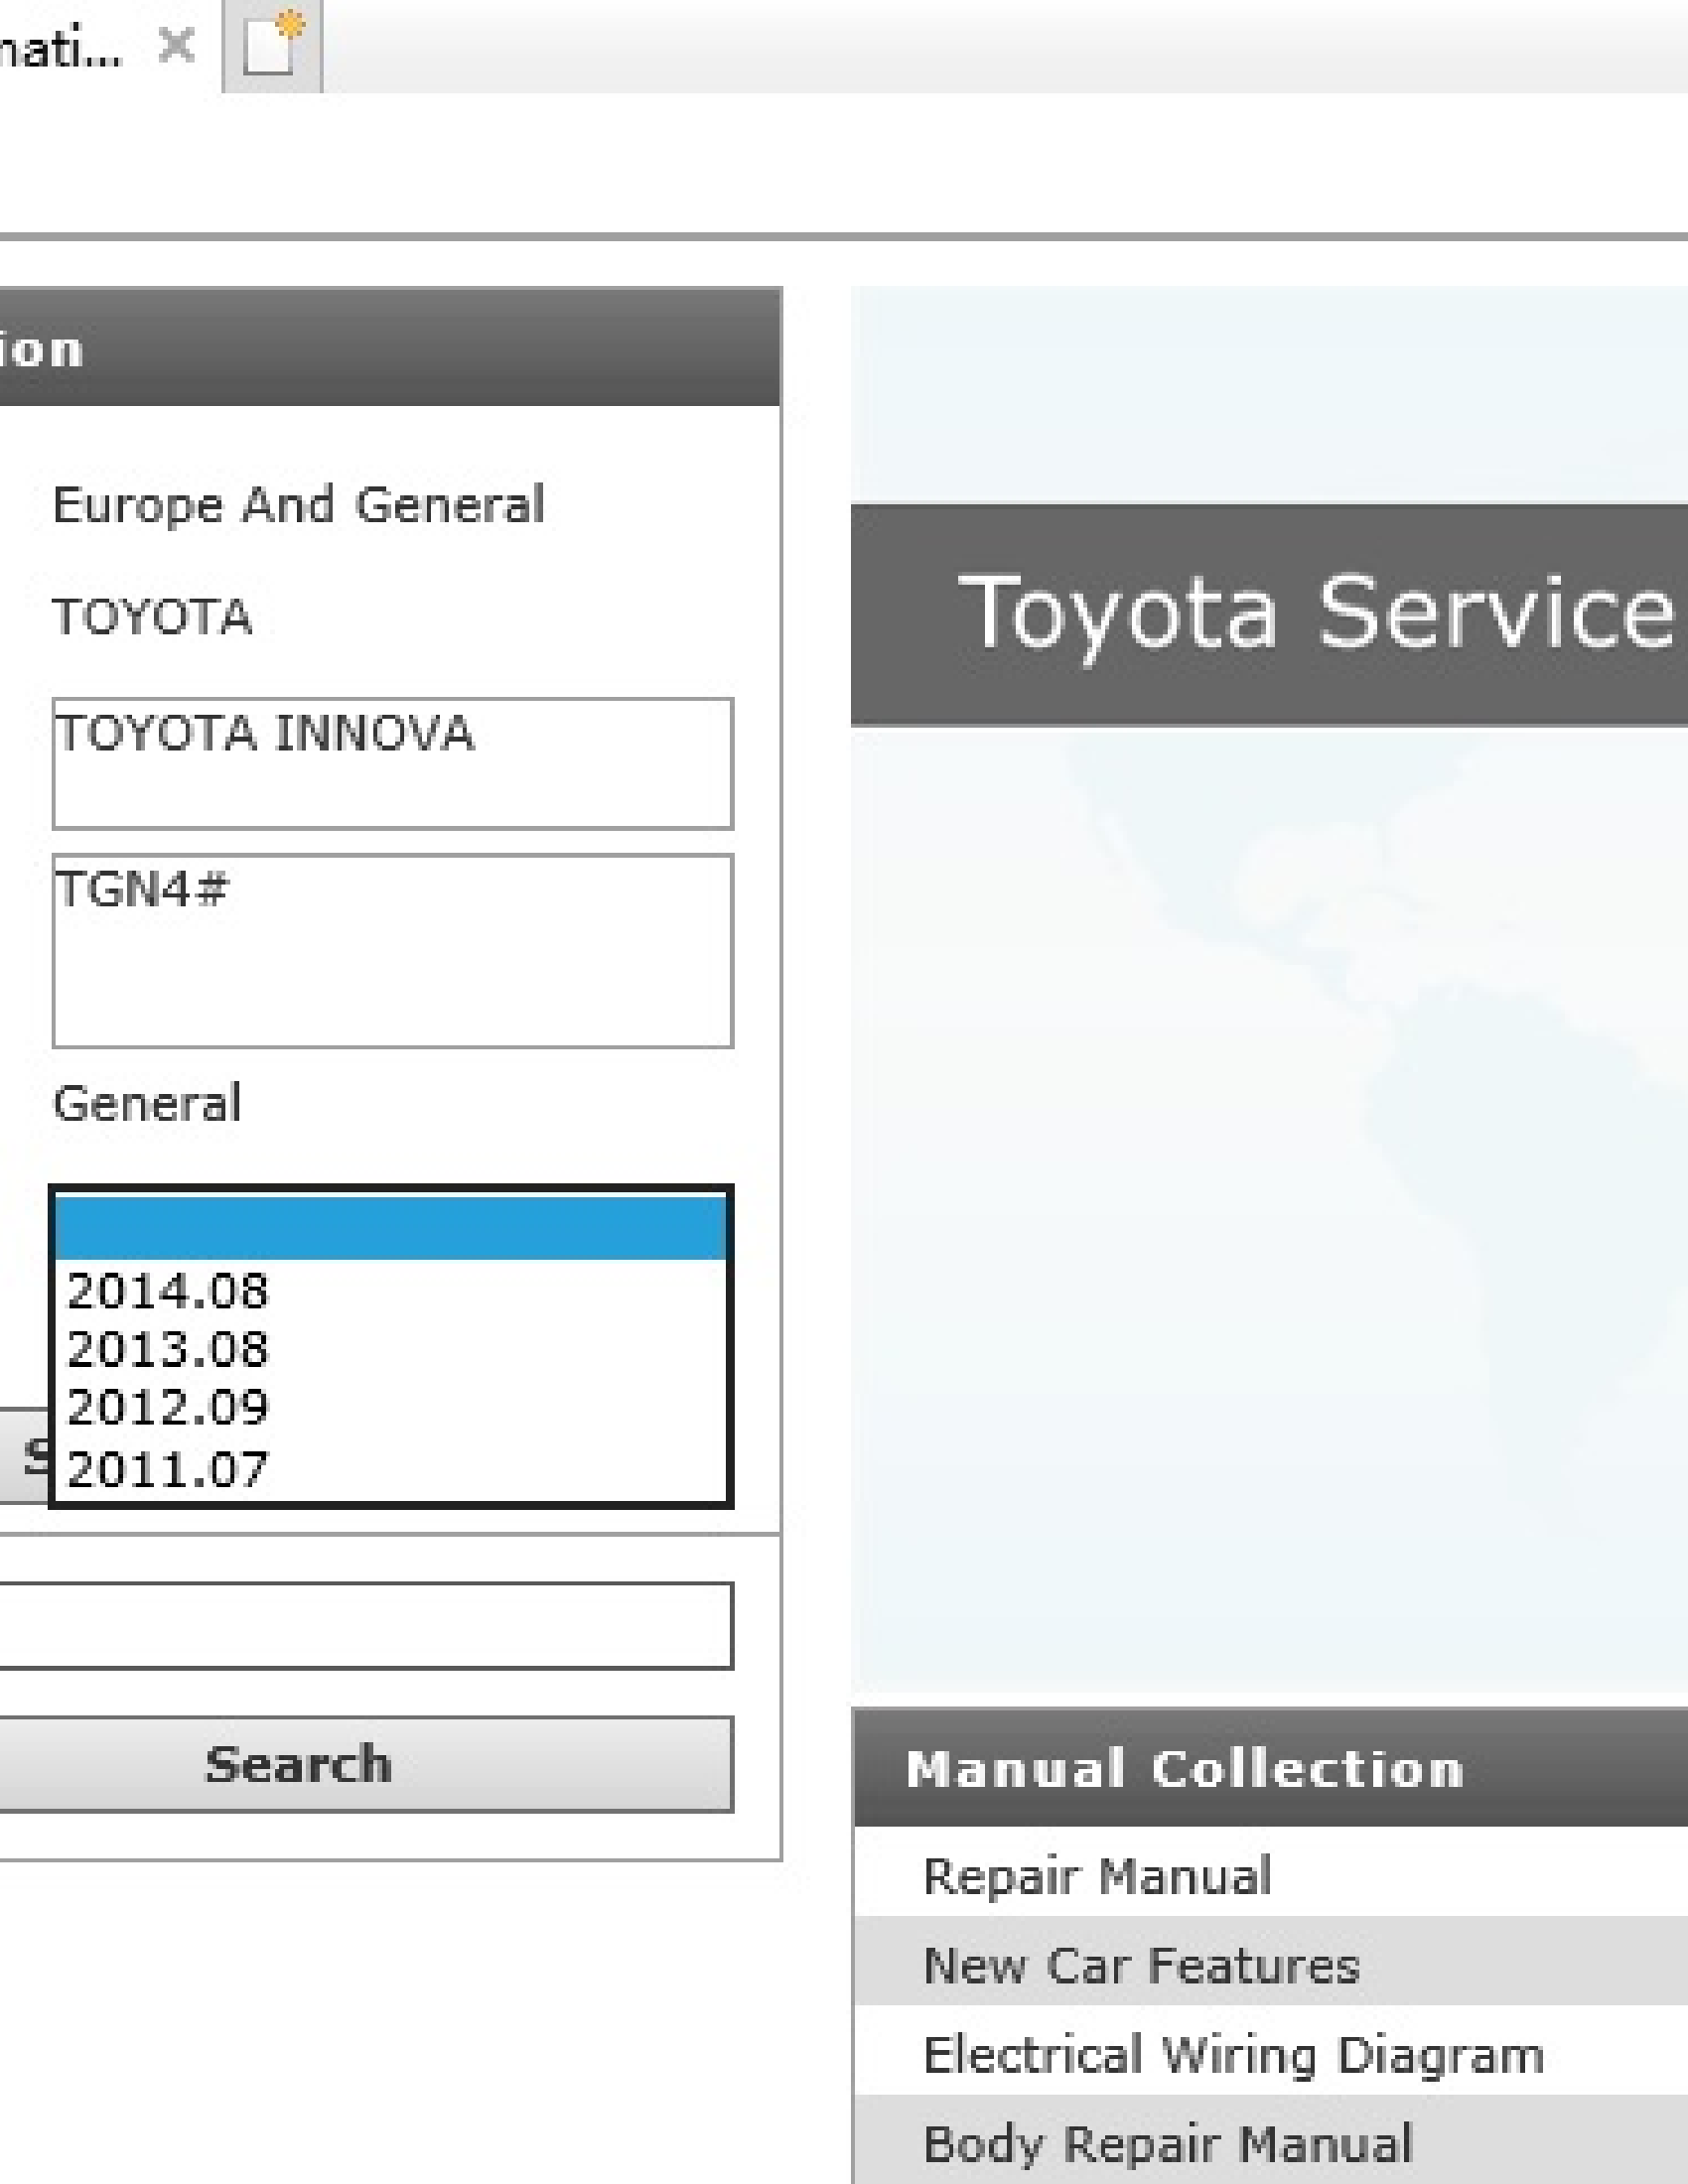 Toyota (TGN4#) INNOVA manual